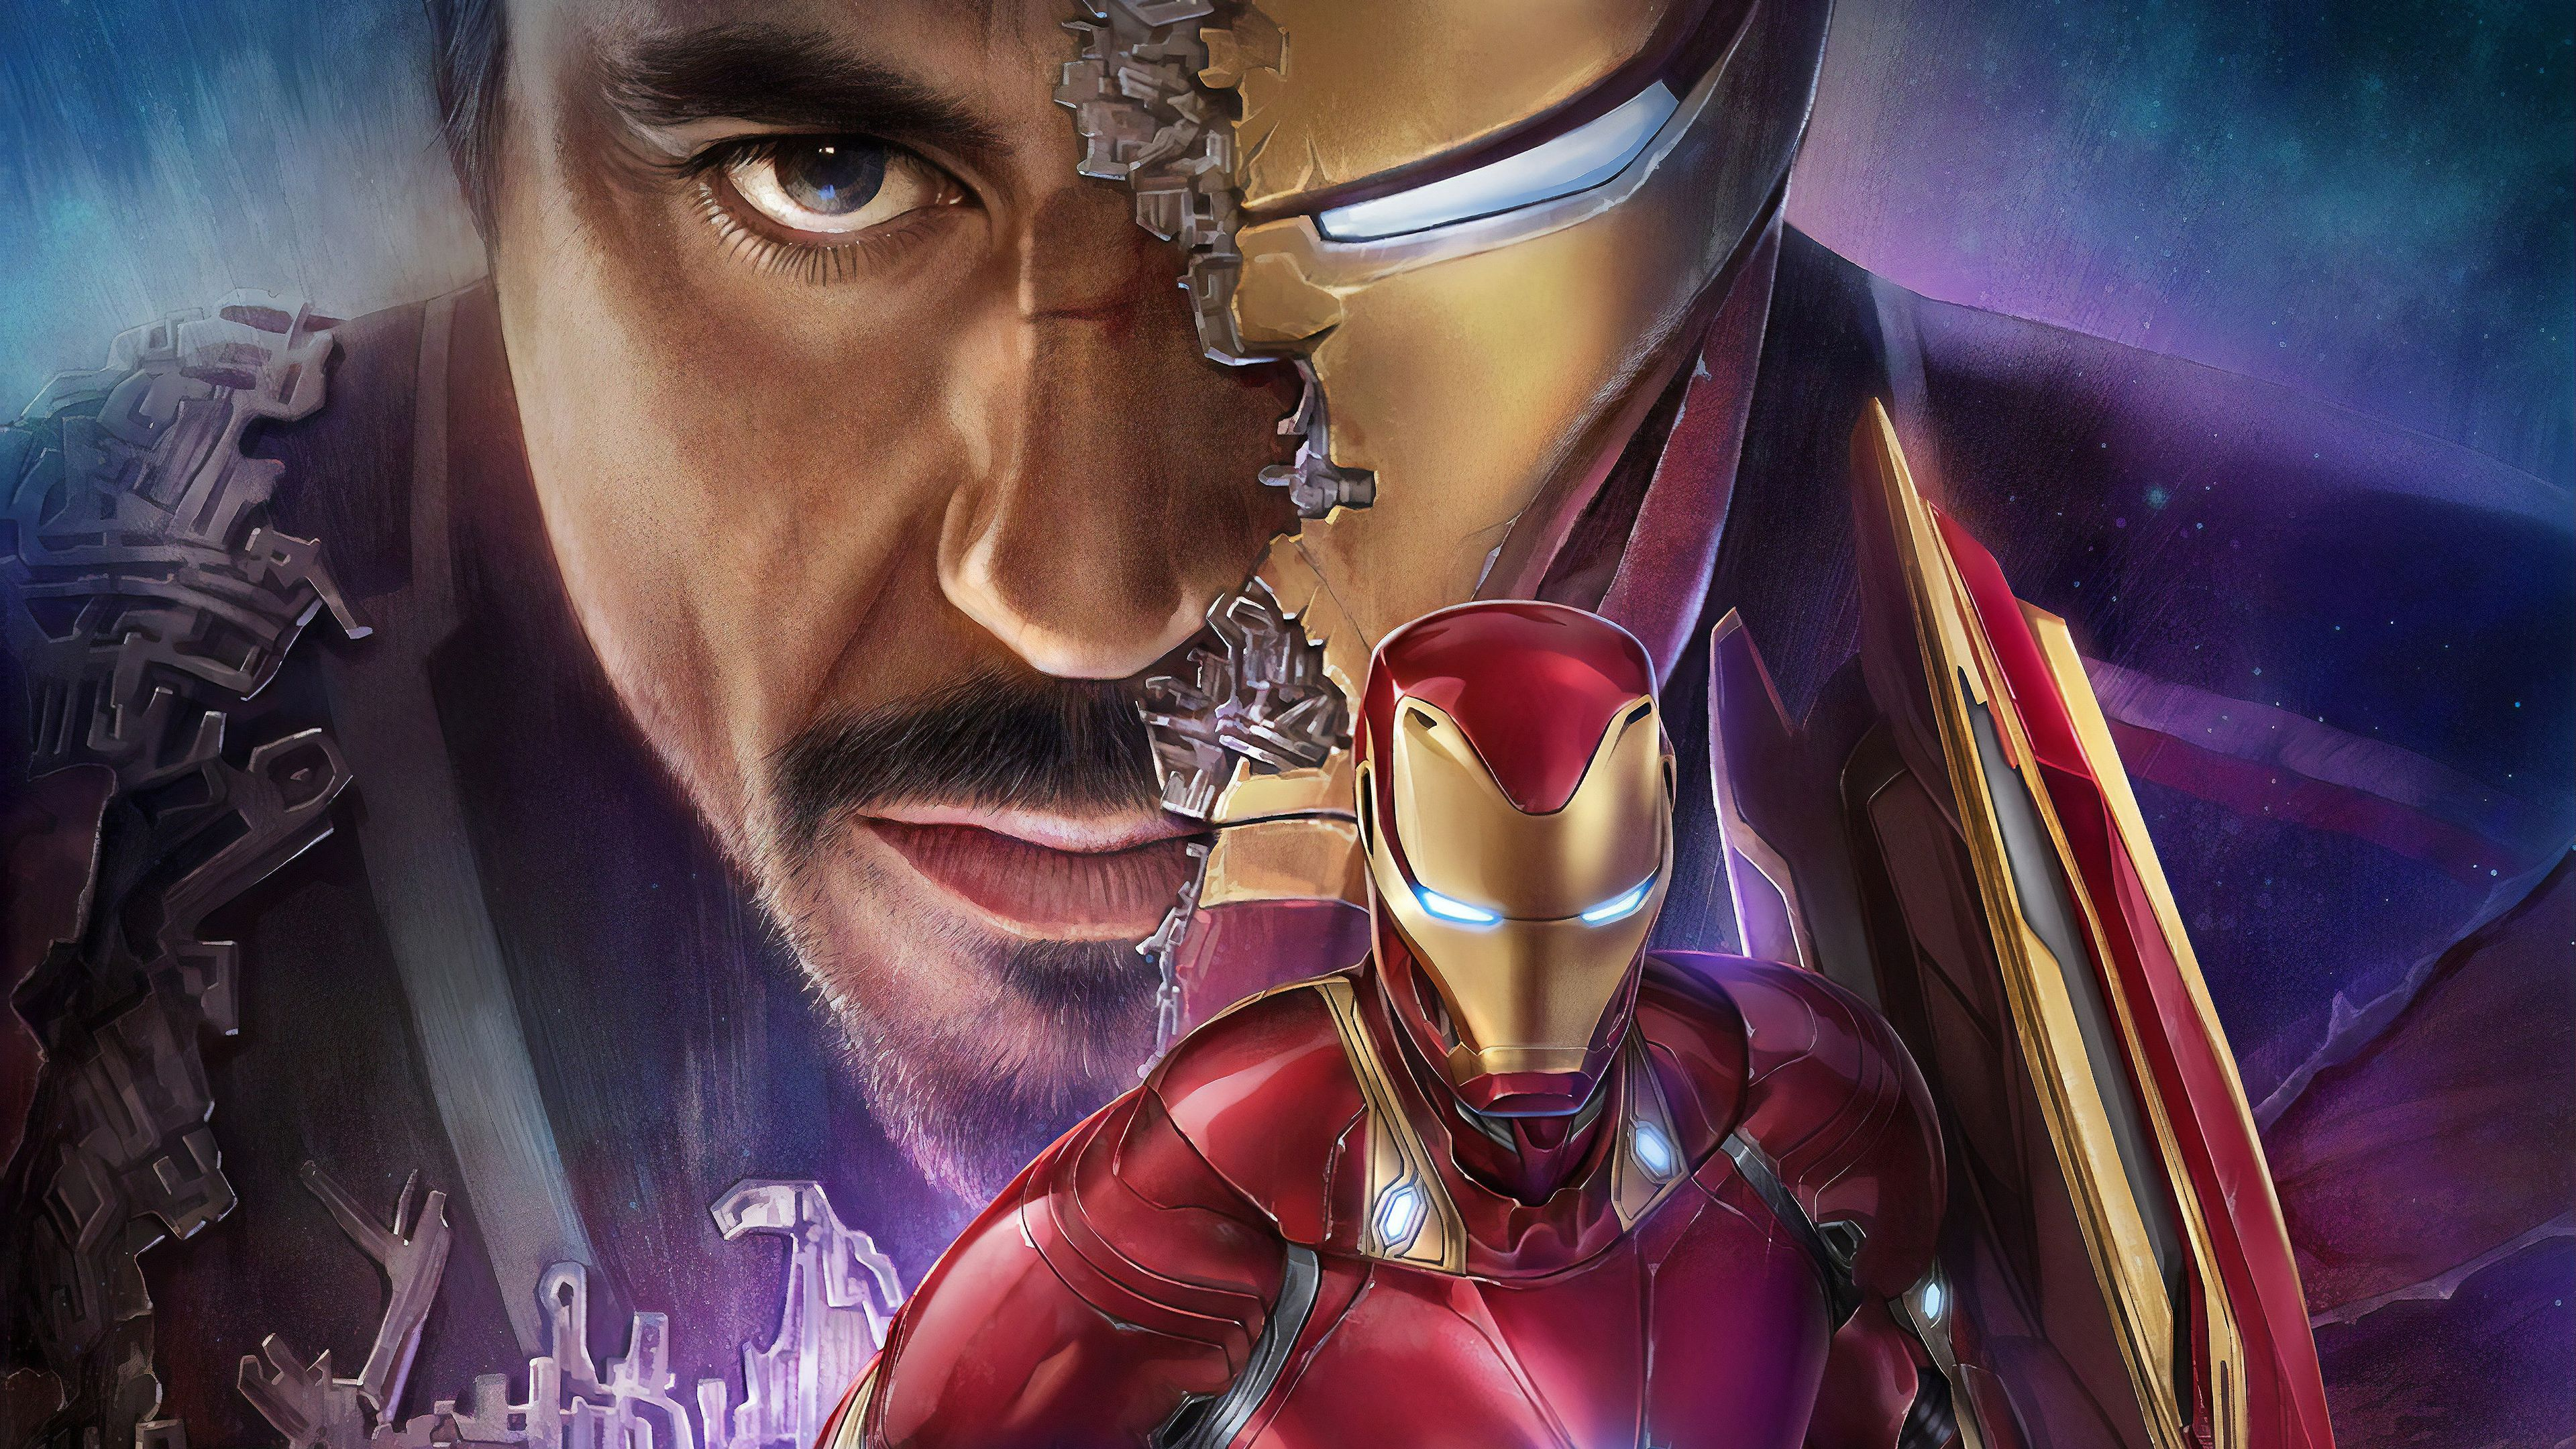 3840x2160 Tony Stark Iron Man 4k superheroes wallpapers, iron man wallpapers, hd- wallpapers, deviantart wallpapers&acirc;&#128;&brvbar; | Iron man artwork, Iron man wallpaper, Iron man hd images